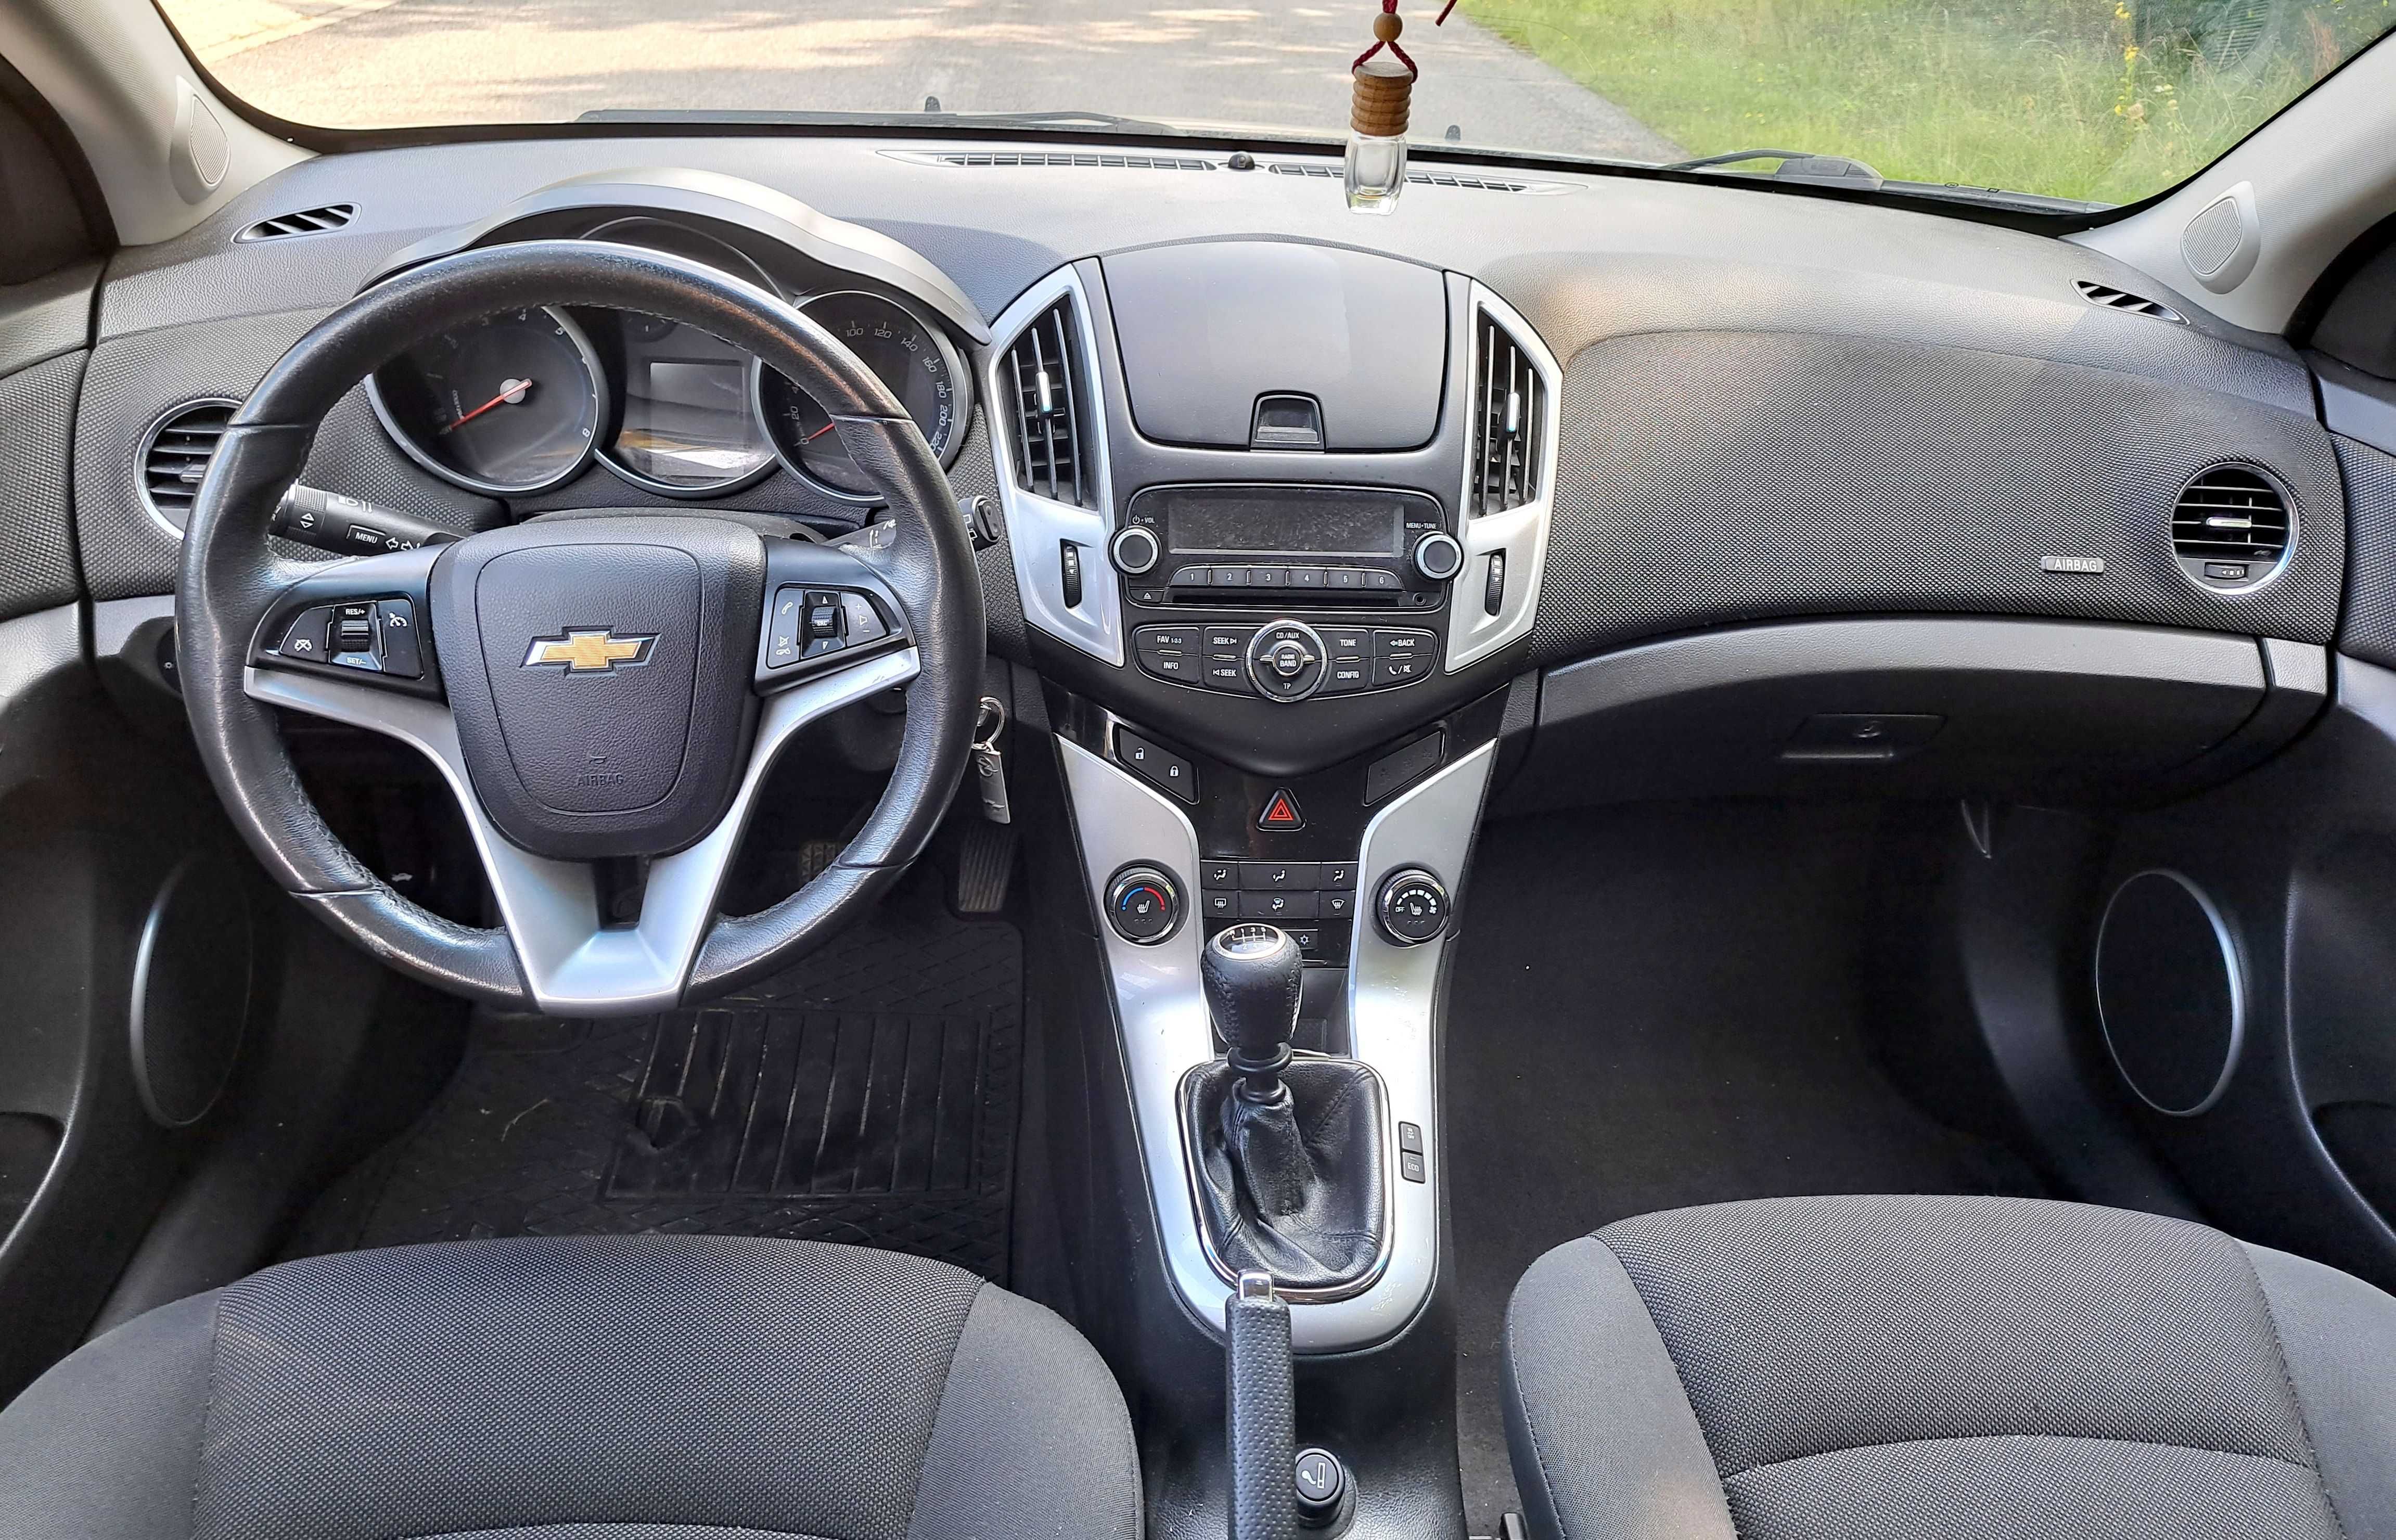 2014 - Chevrolet Cruze - 1,4 Turbo - 131000km